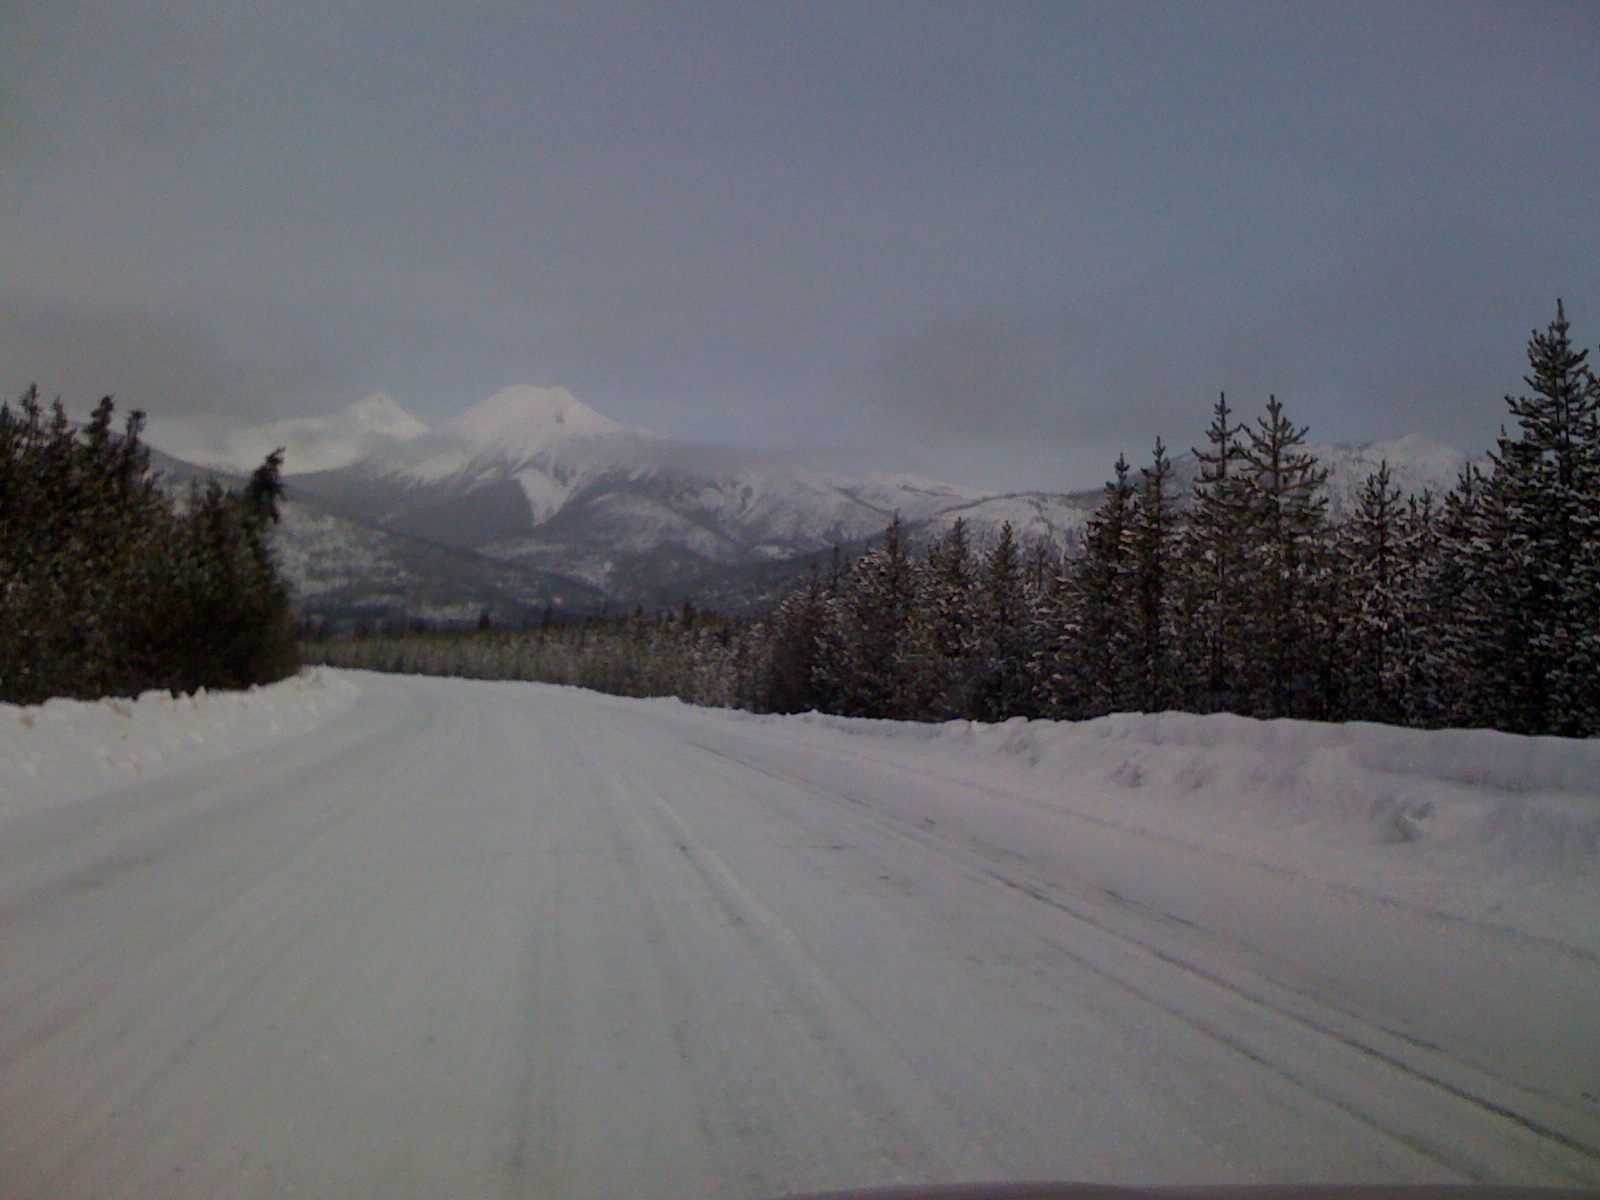 Canada road conditions - March, 2010.